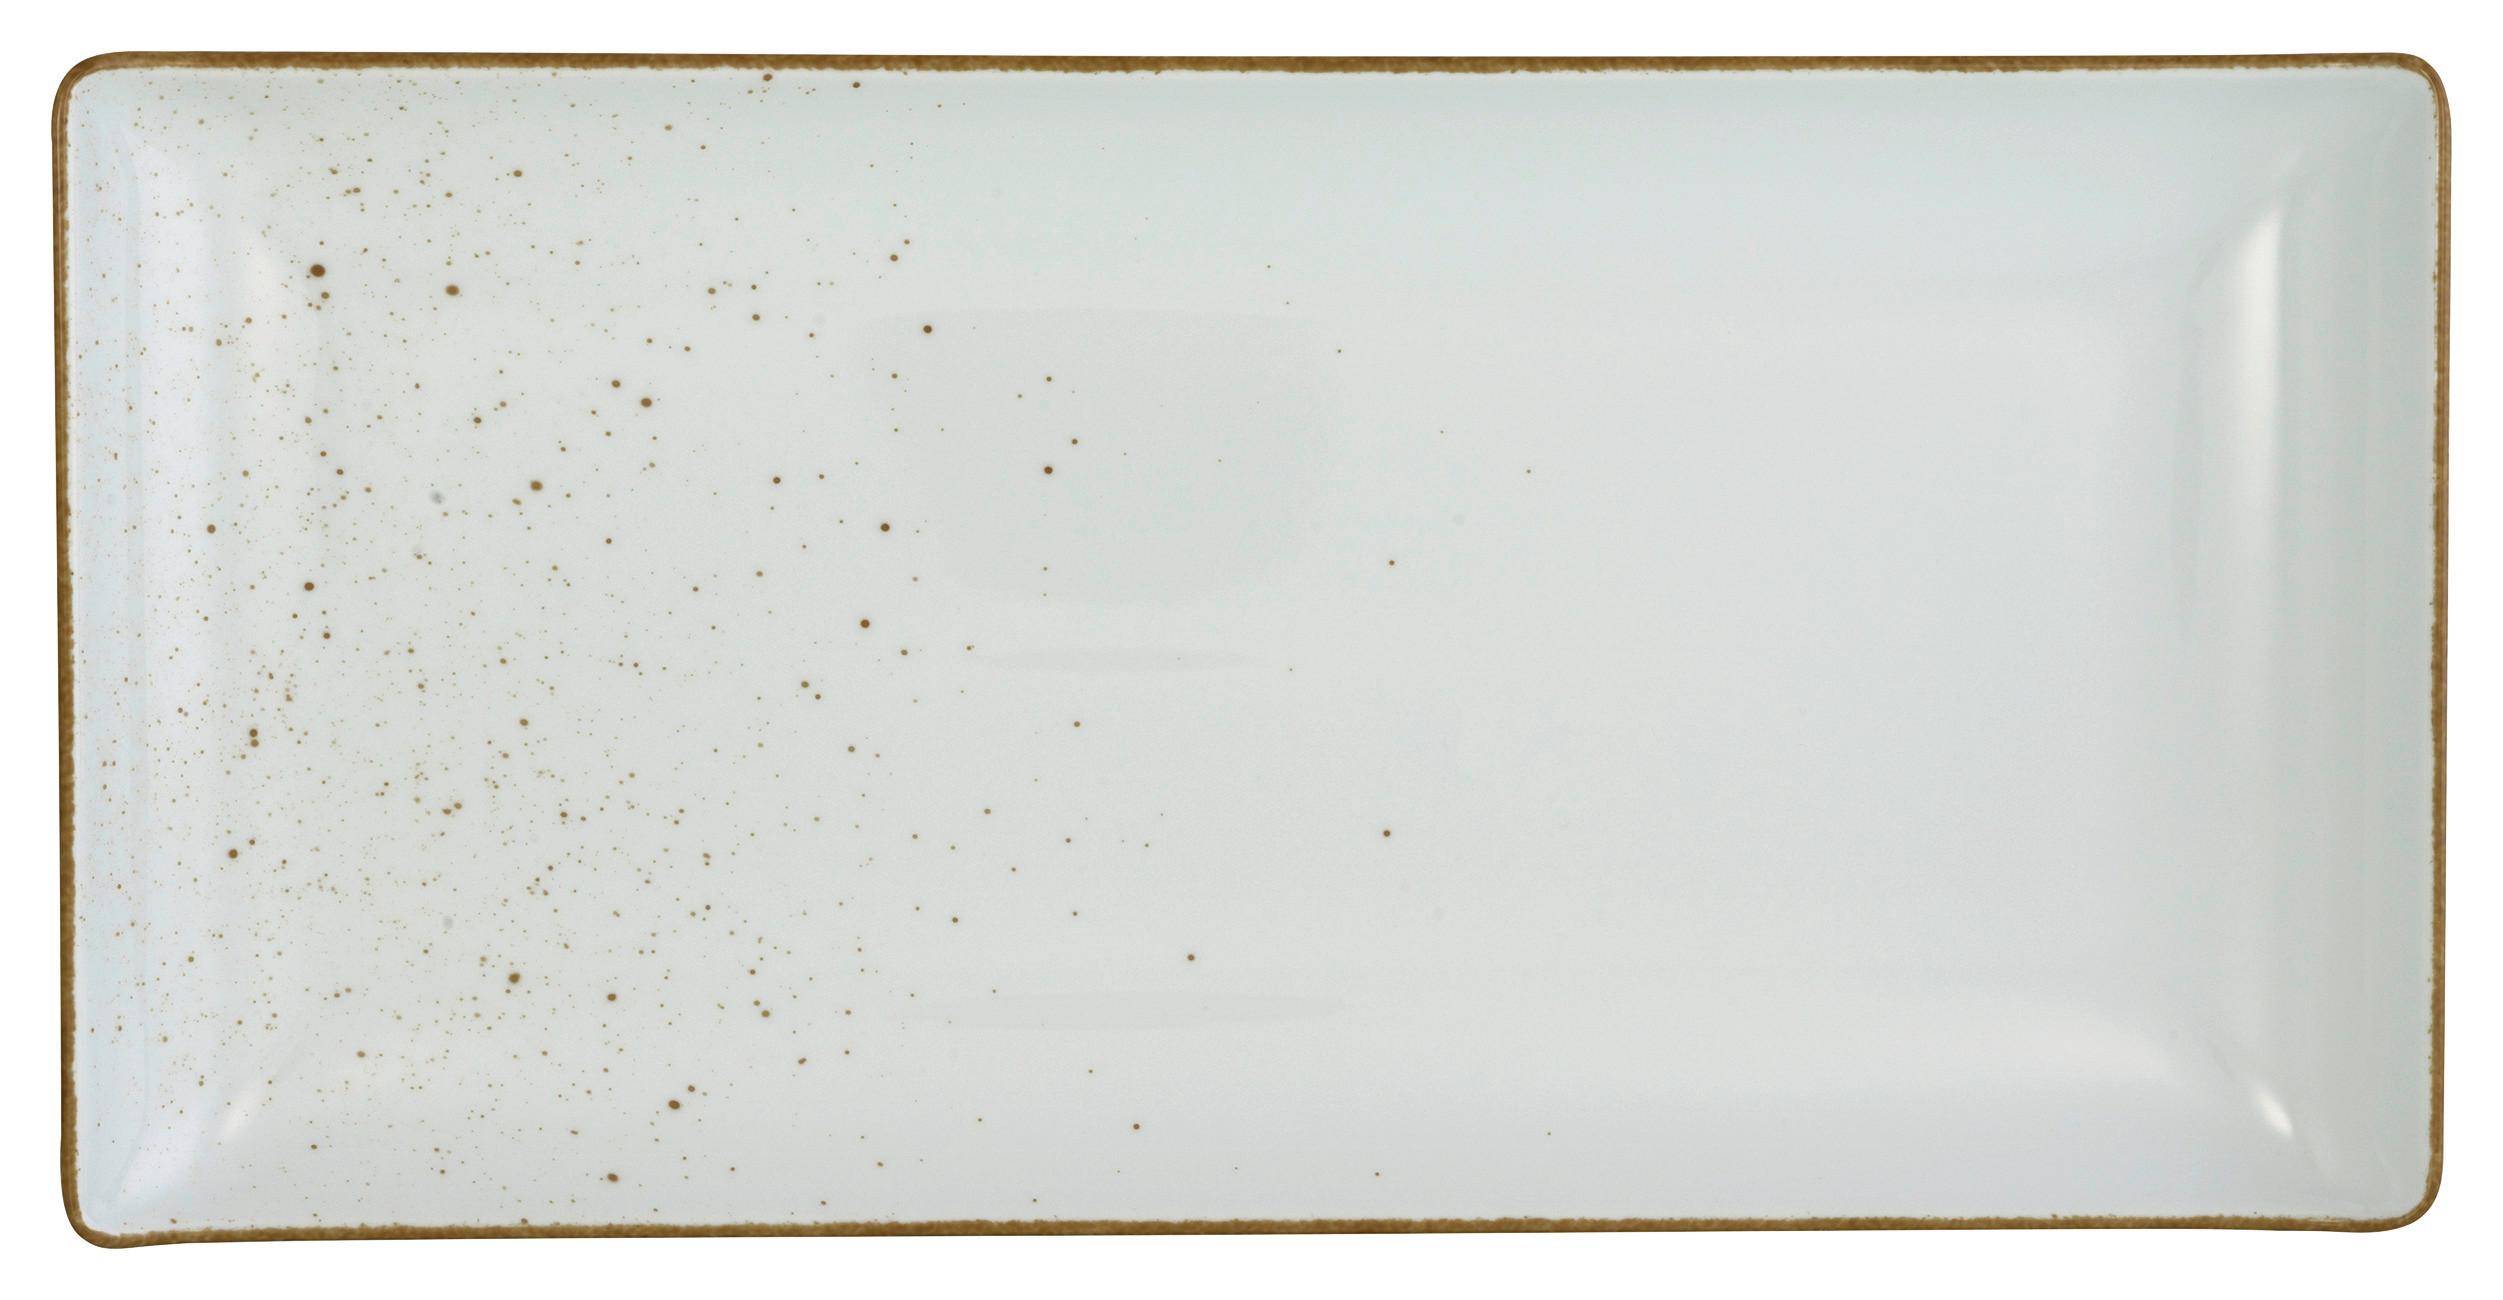 Servierplatte Capri in Weiss - Weiss, Modern, Keramik (32/16,5/2cm) - Premium Living